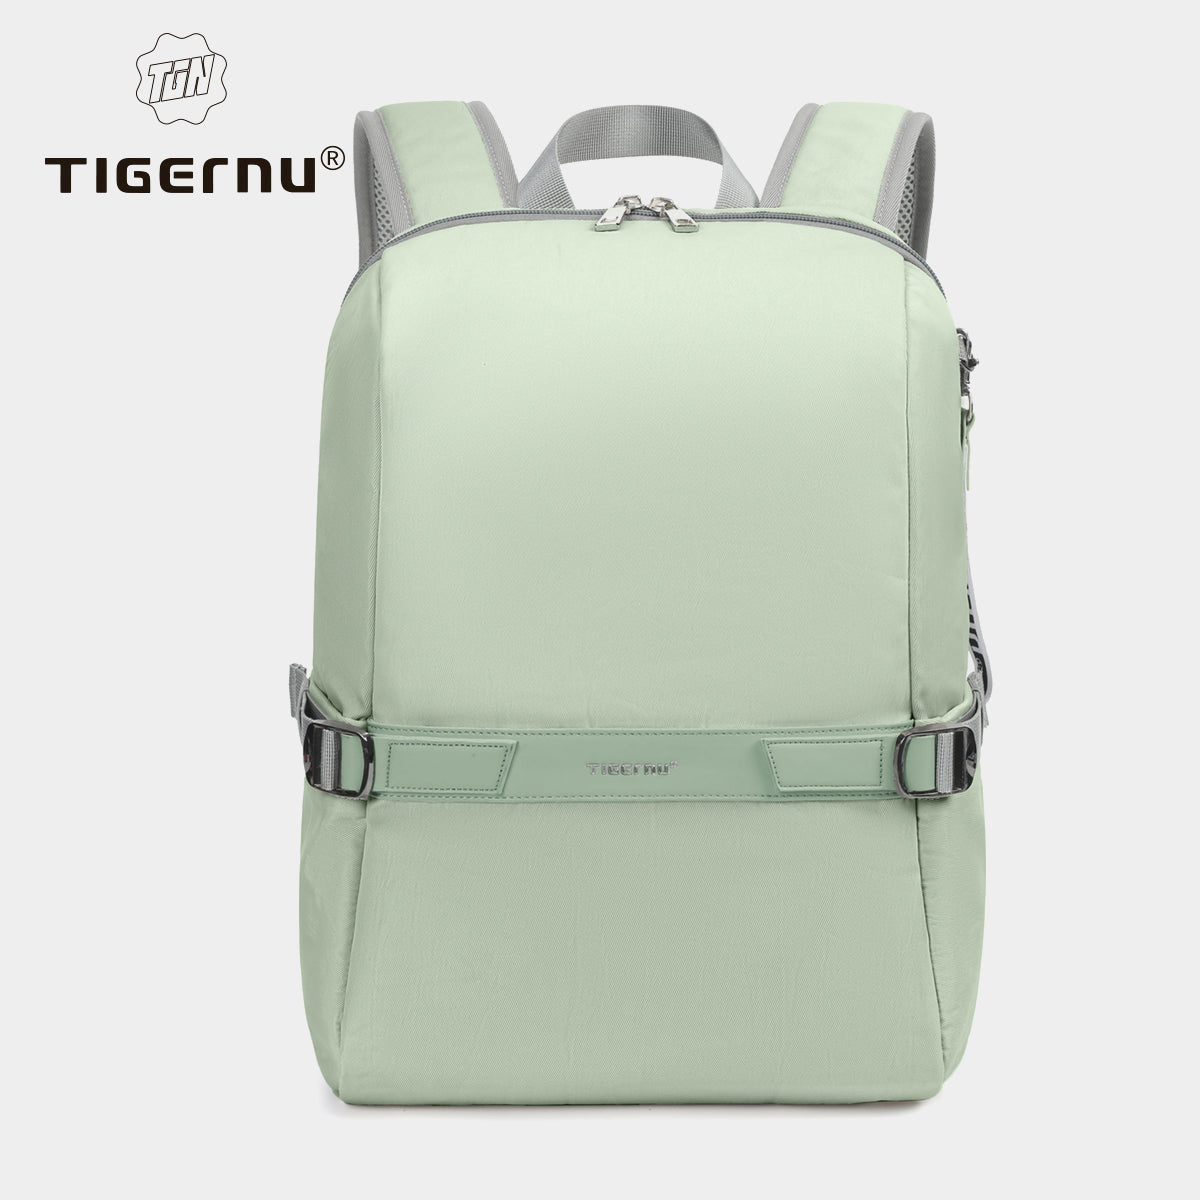 Tigernu T-B9511 custom logo waterproof casual sports backpacks unisex college student laptop backpack